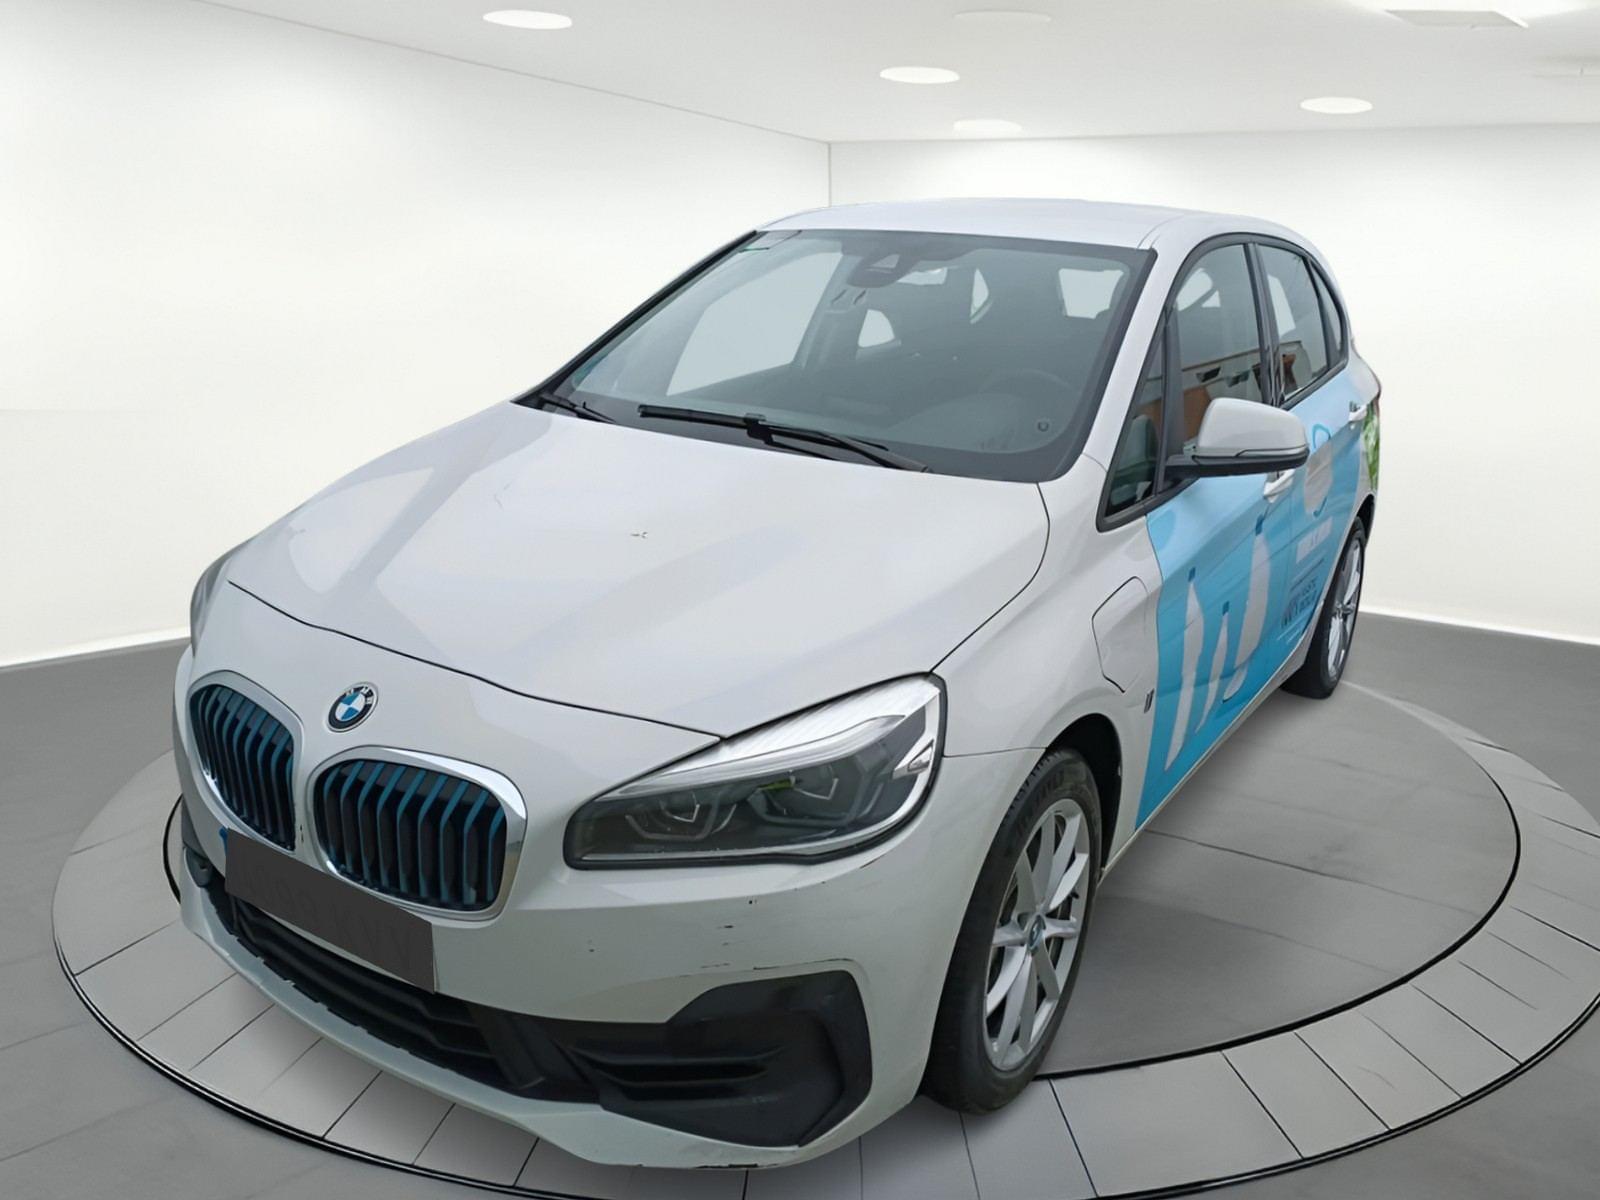 BMW SERIE 2 ACTIVE TOURER 225 XE IPERFORMANCE 1.5 225 CV AT6 E6DT 0 